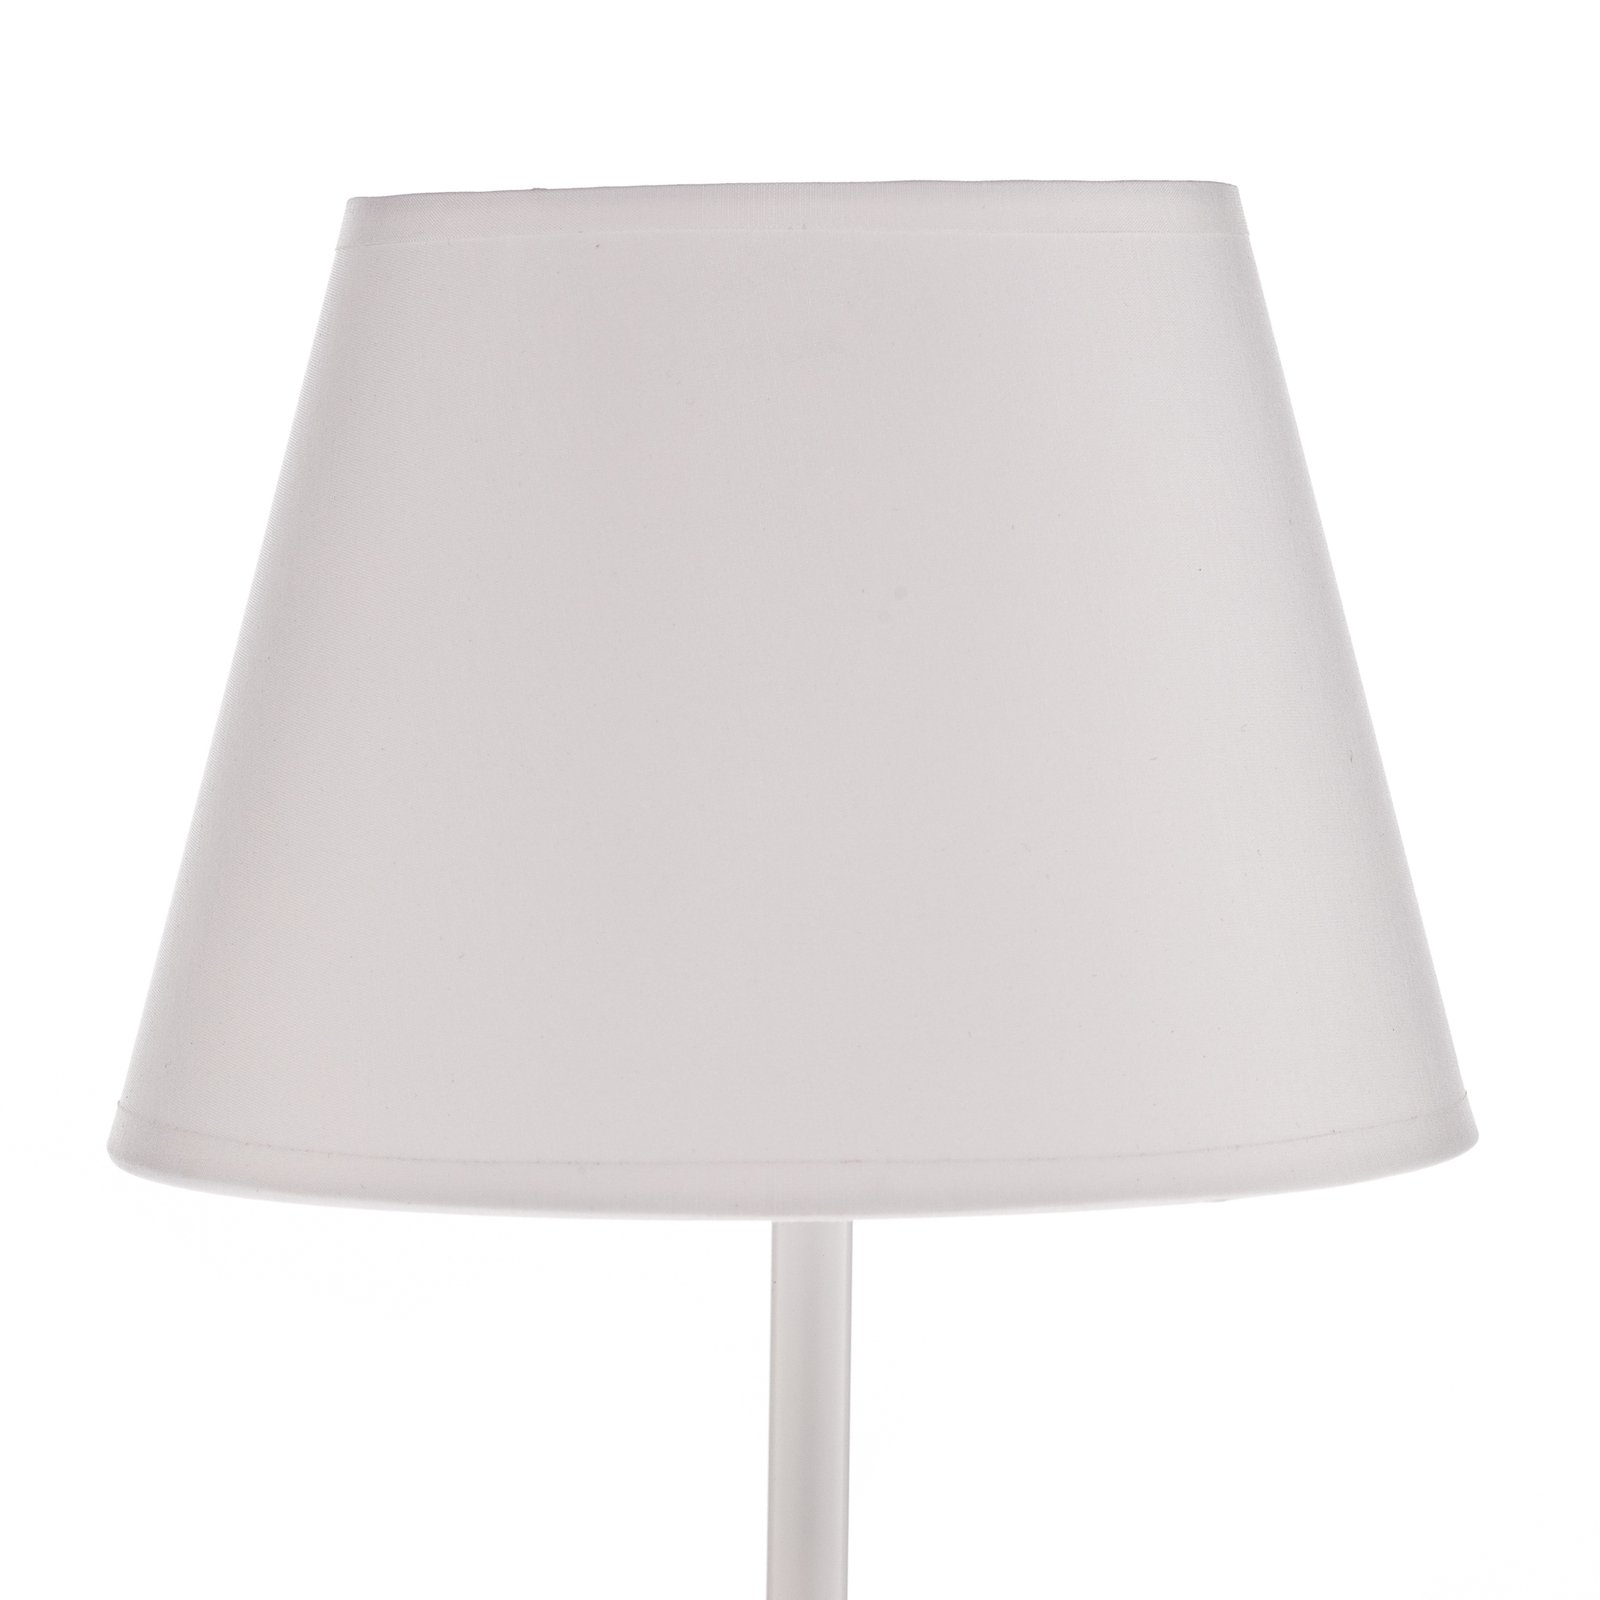 Stalo lempa "Soho", kūgio formos, 33 cm aukščio, balta